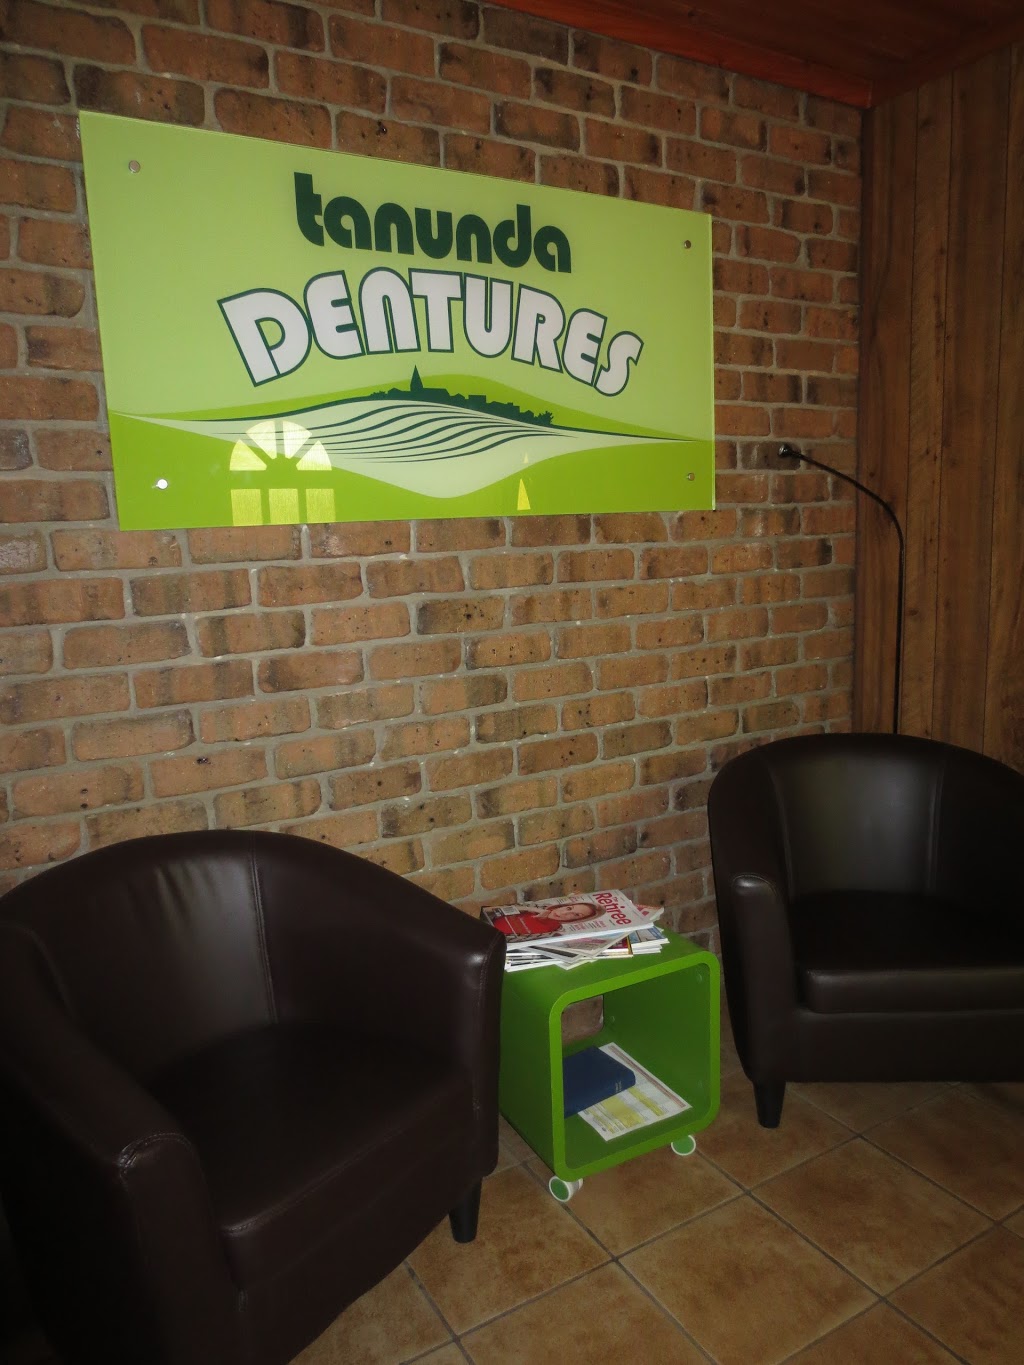 Tanunda Denture Clinic | health | 160 Murray St, Tanunda SA 5352, Australia | 0885631466 OR +61 8 8563 1466